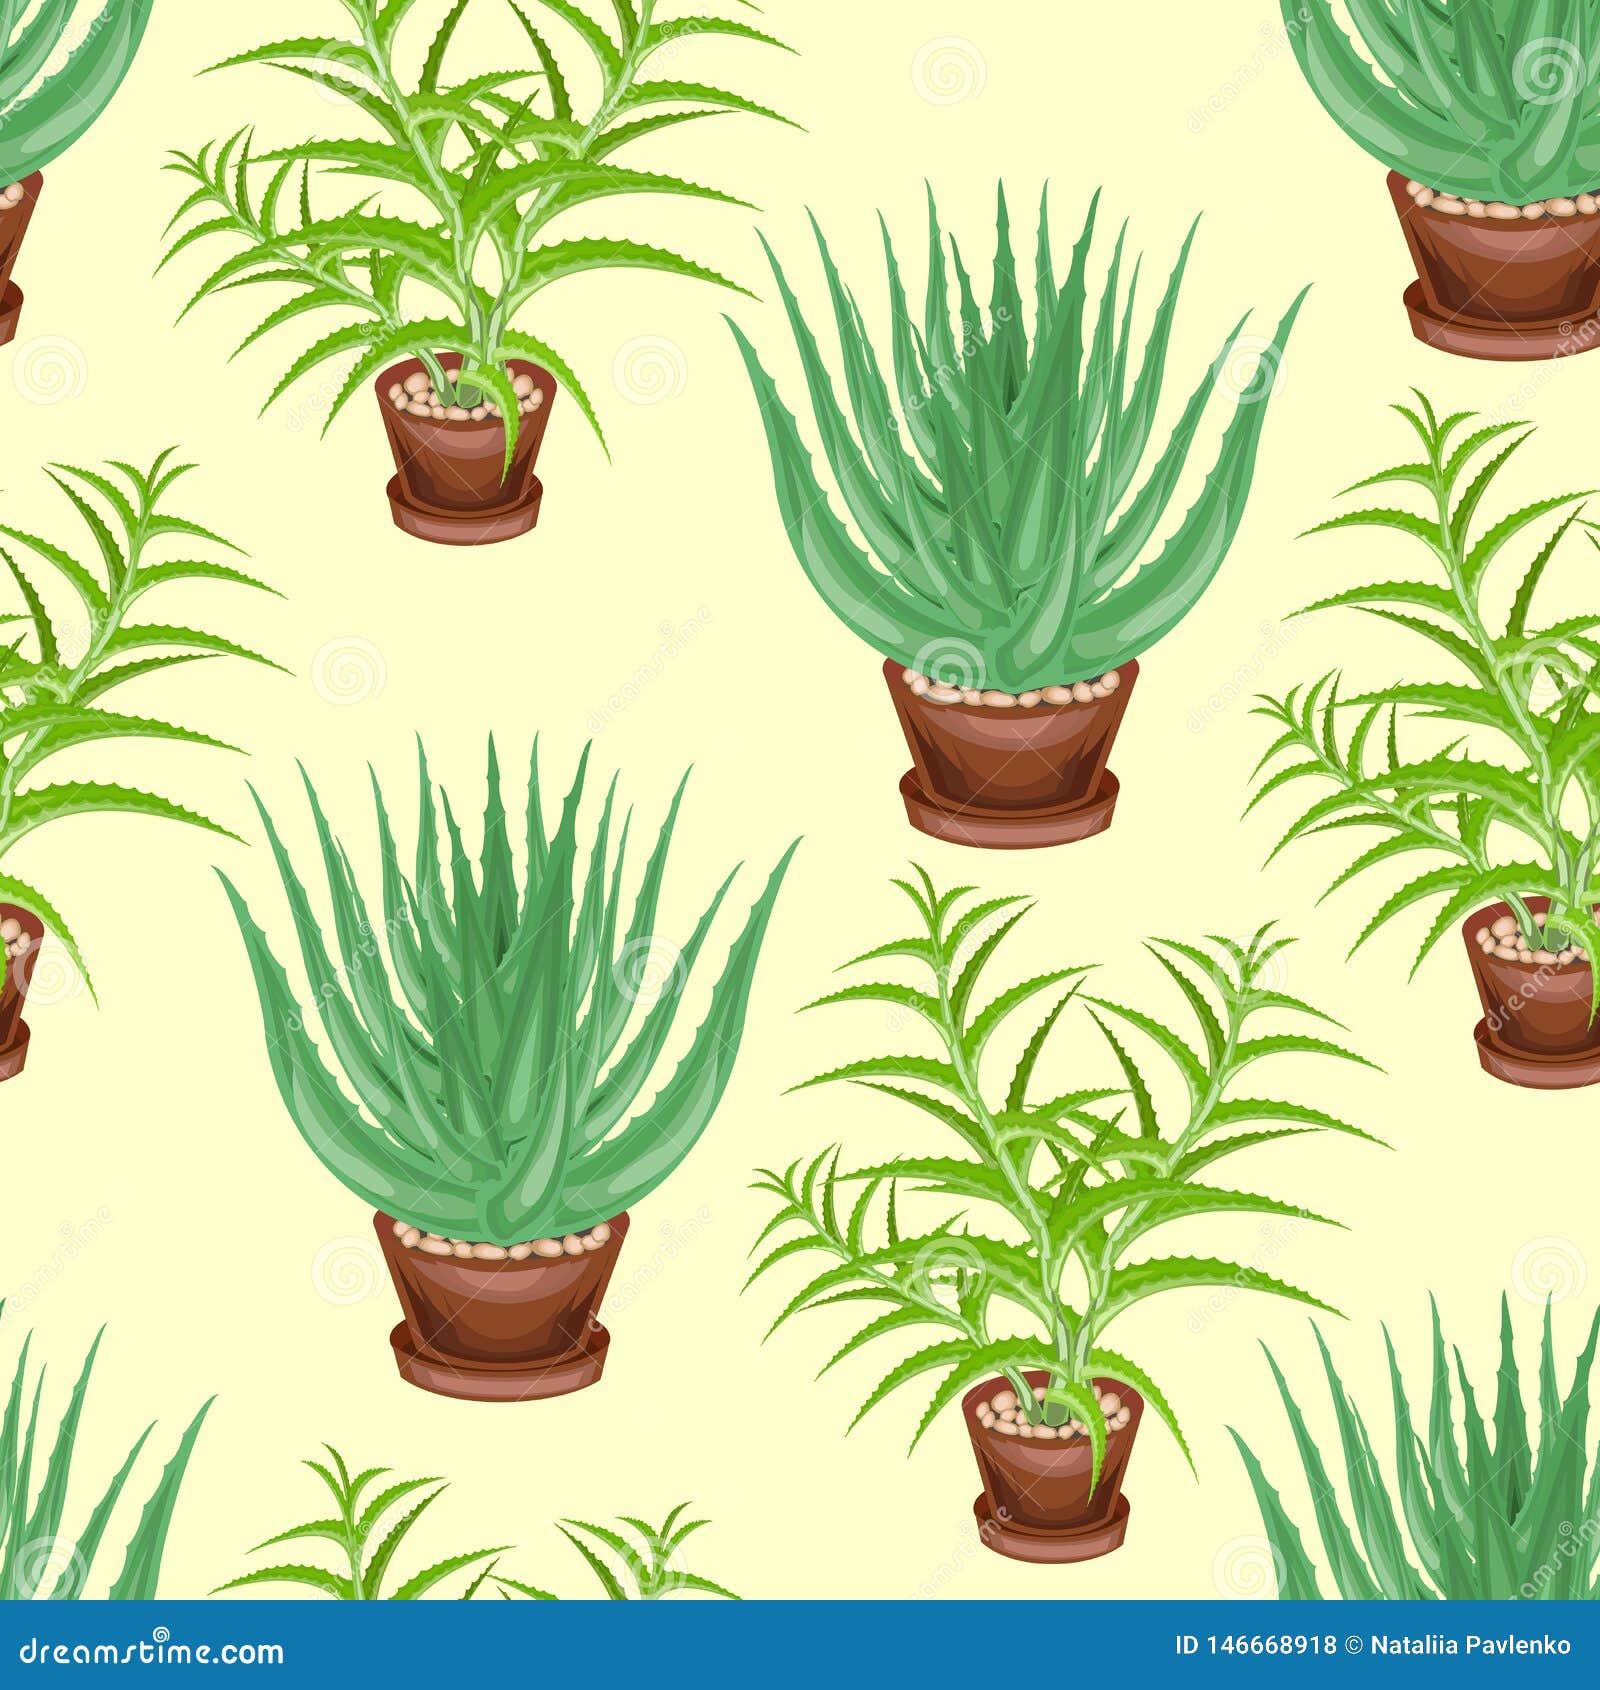 Aloe Tree and Aloe Vera in Pots on a Green Background. Seamless Pattern  Stock Illustration - Illustration of favorite, flora: 146668918